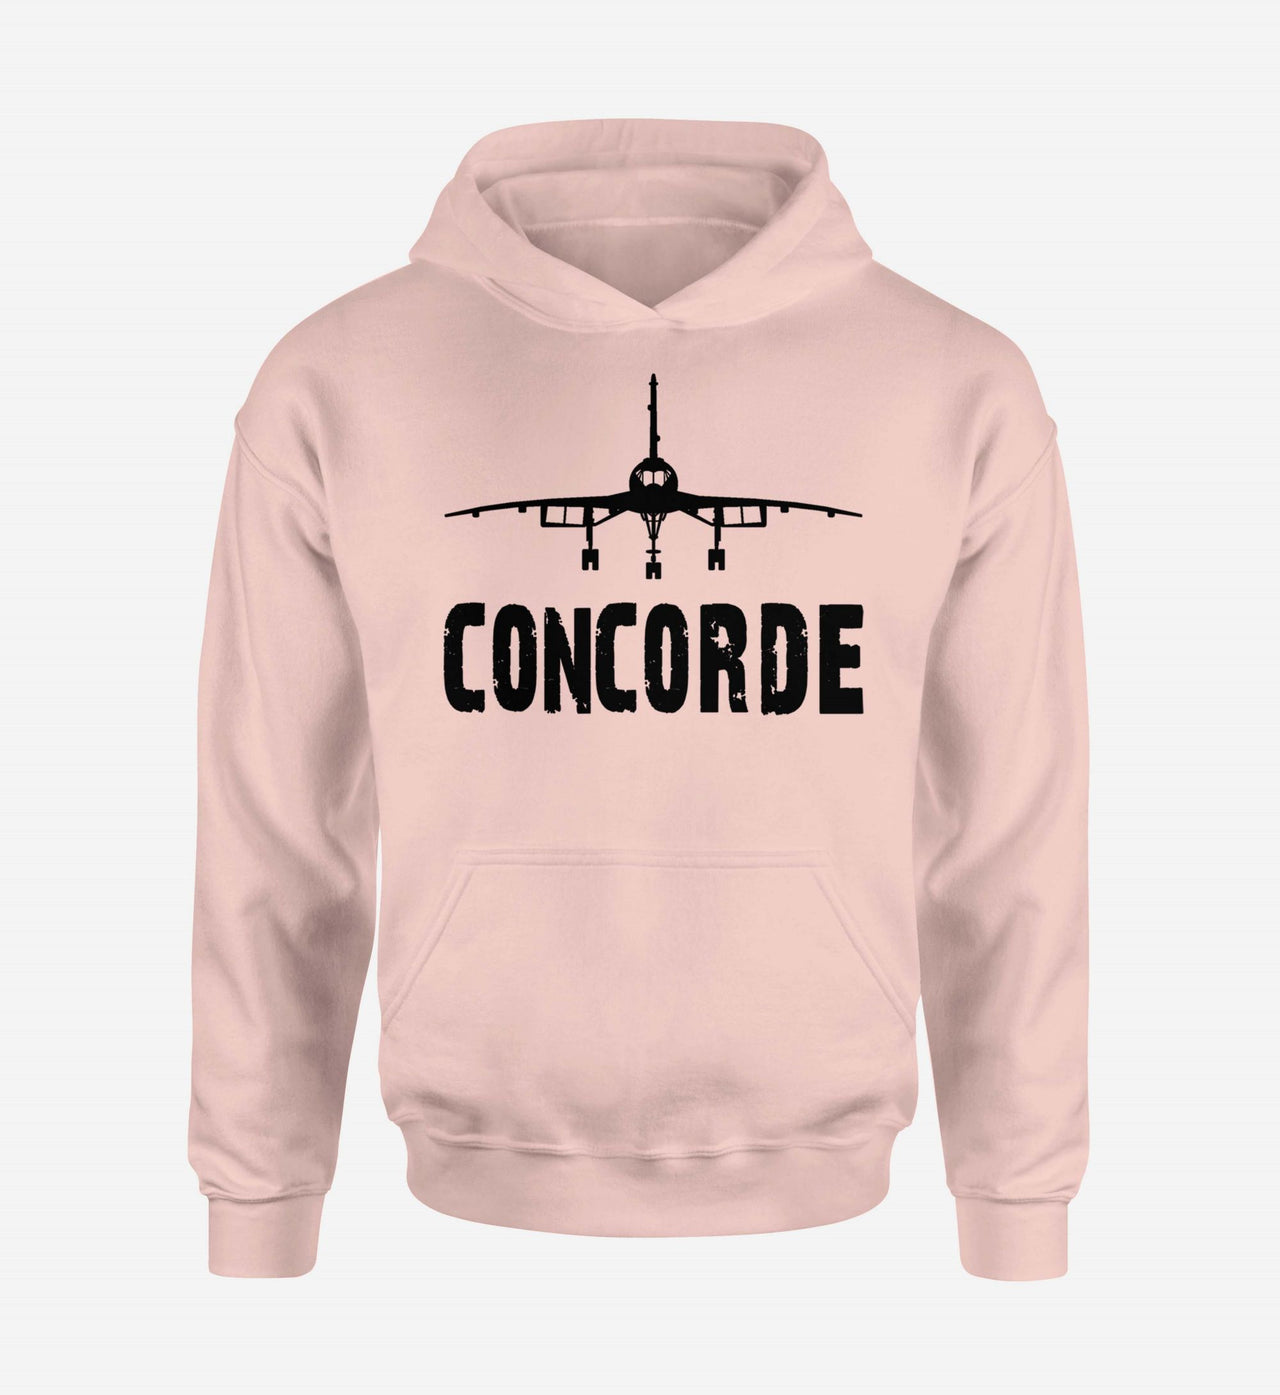 Concorde & Plane Designed Hoodies